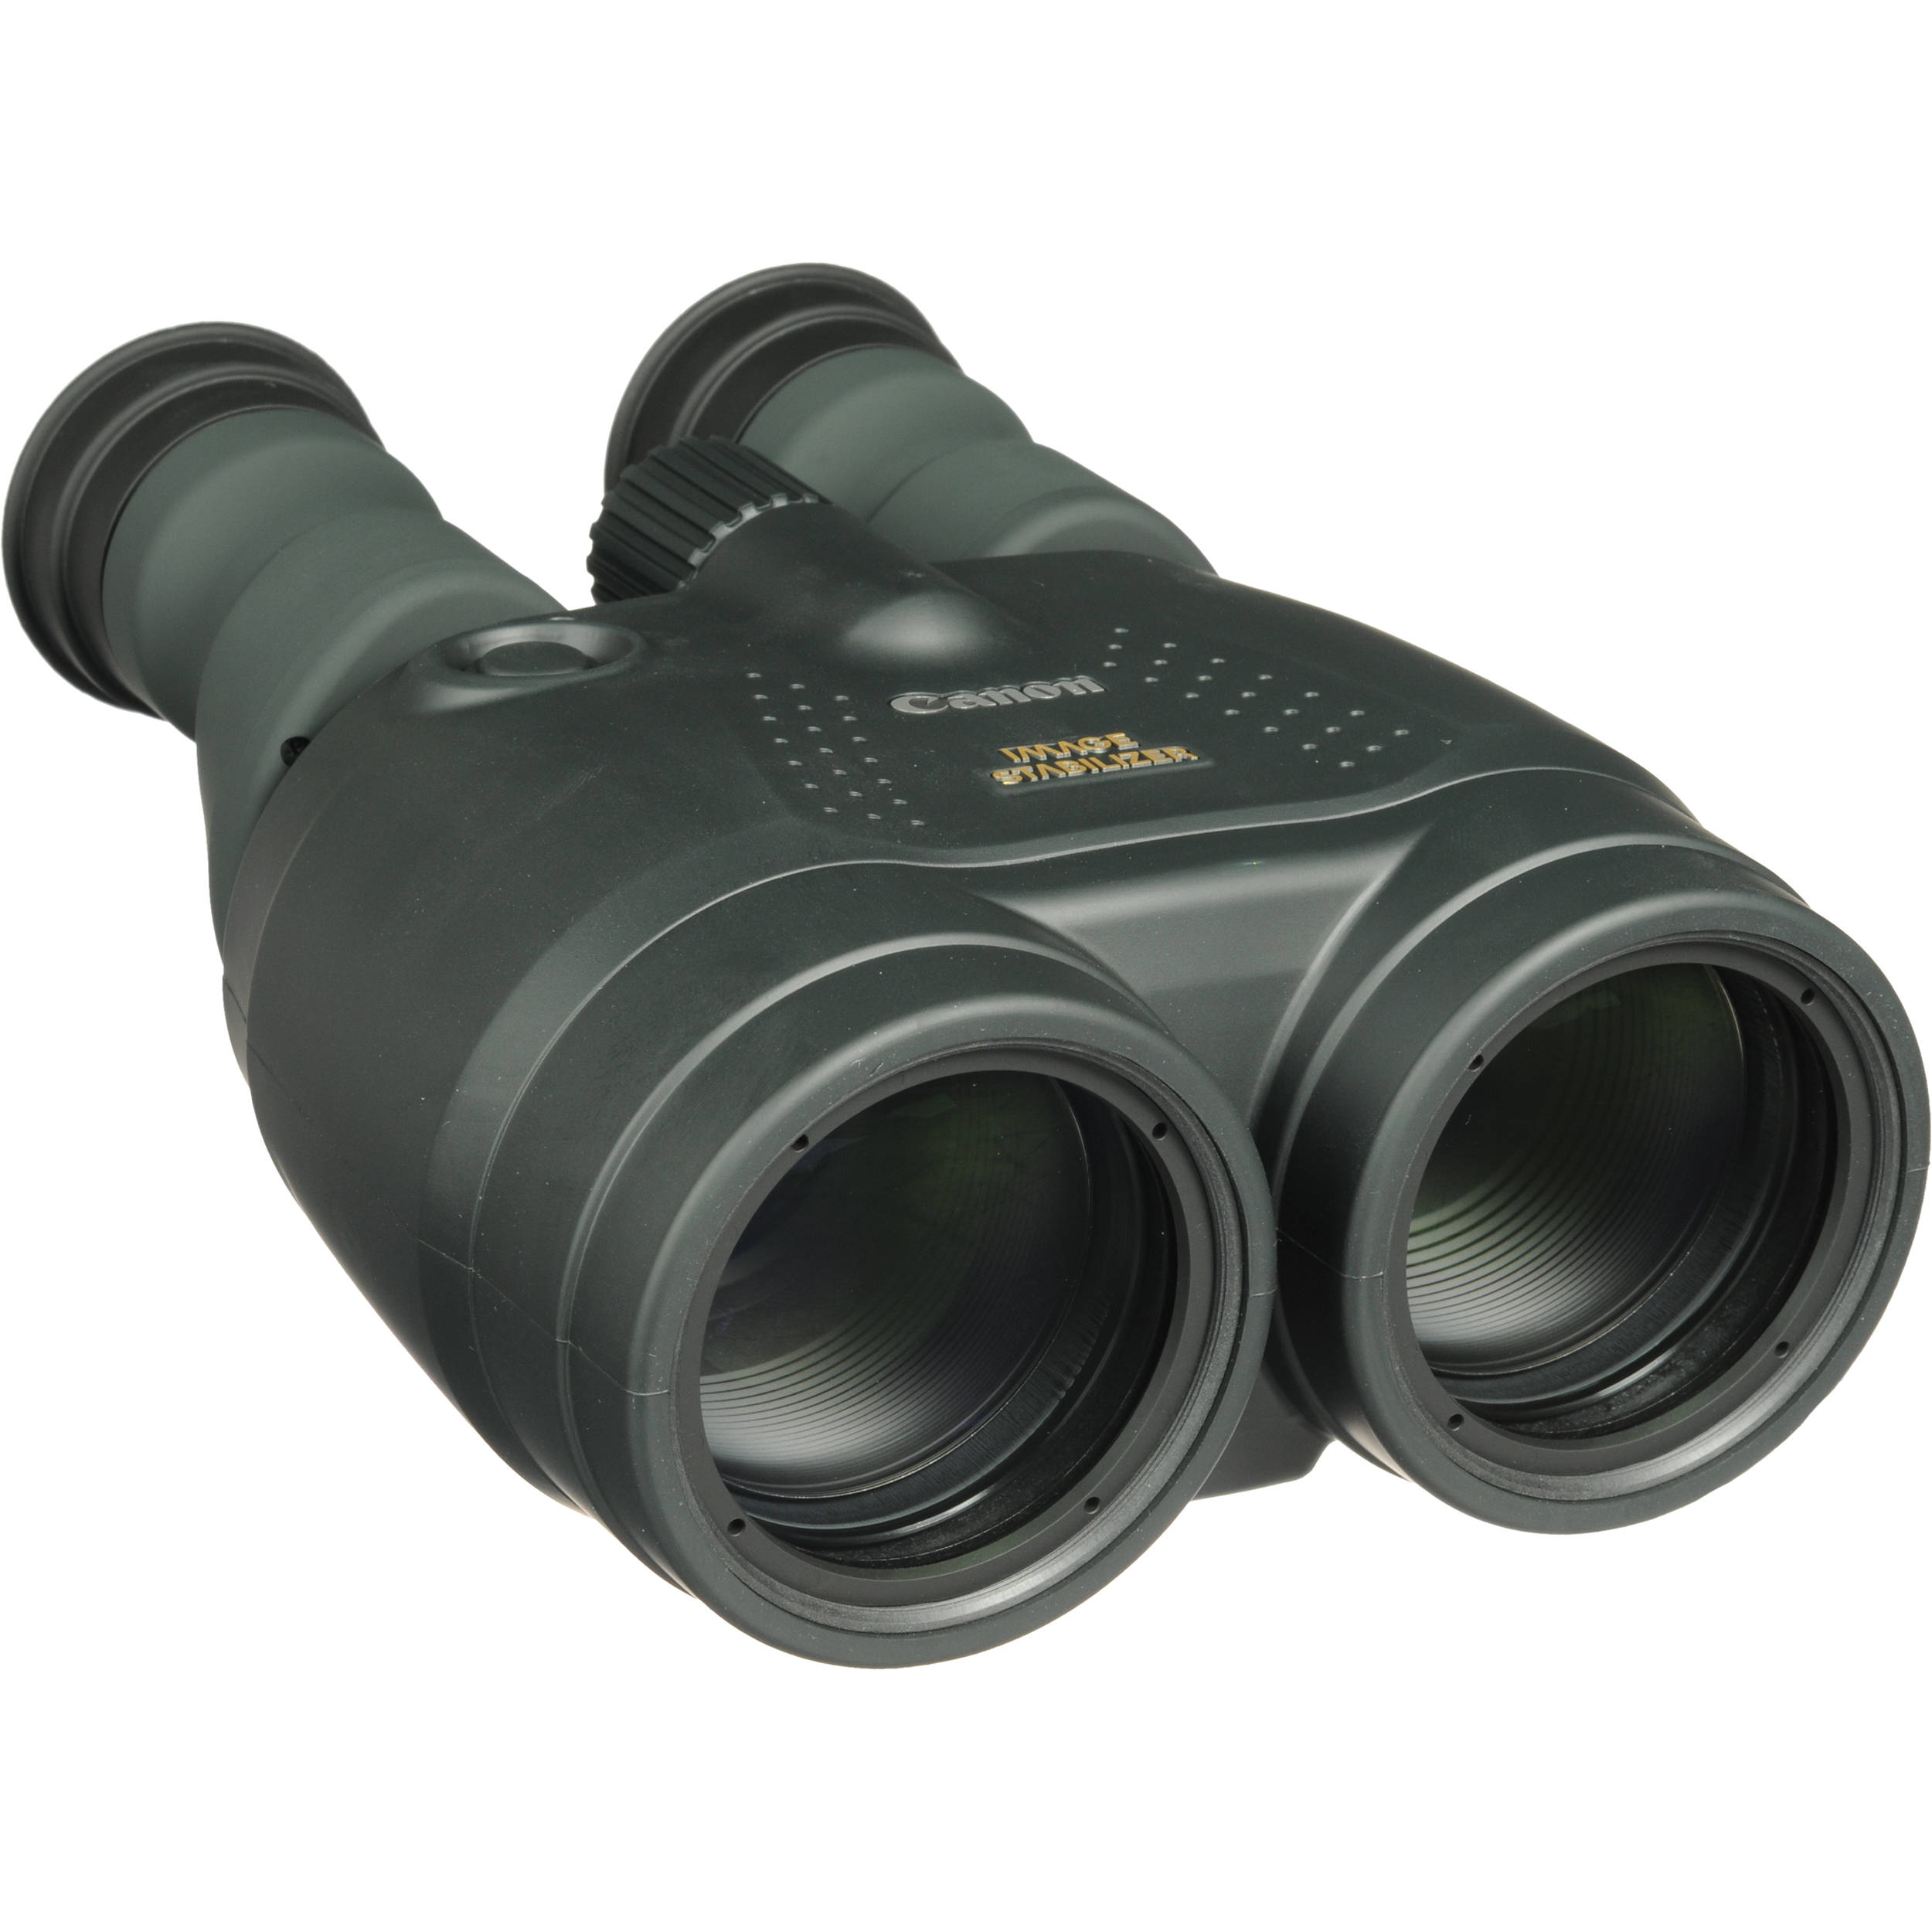 Best Image Stabilized Binoculars (Updated: December 2020)